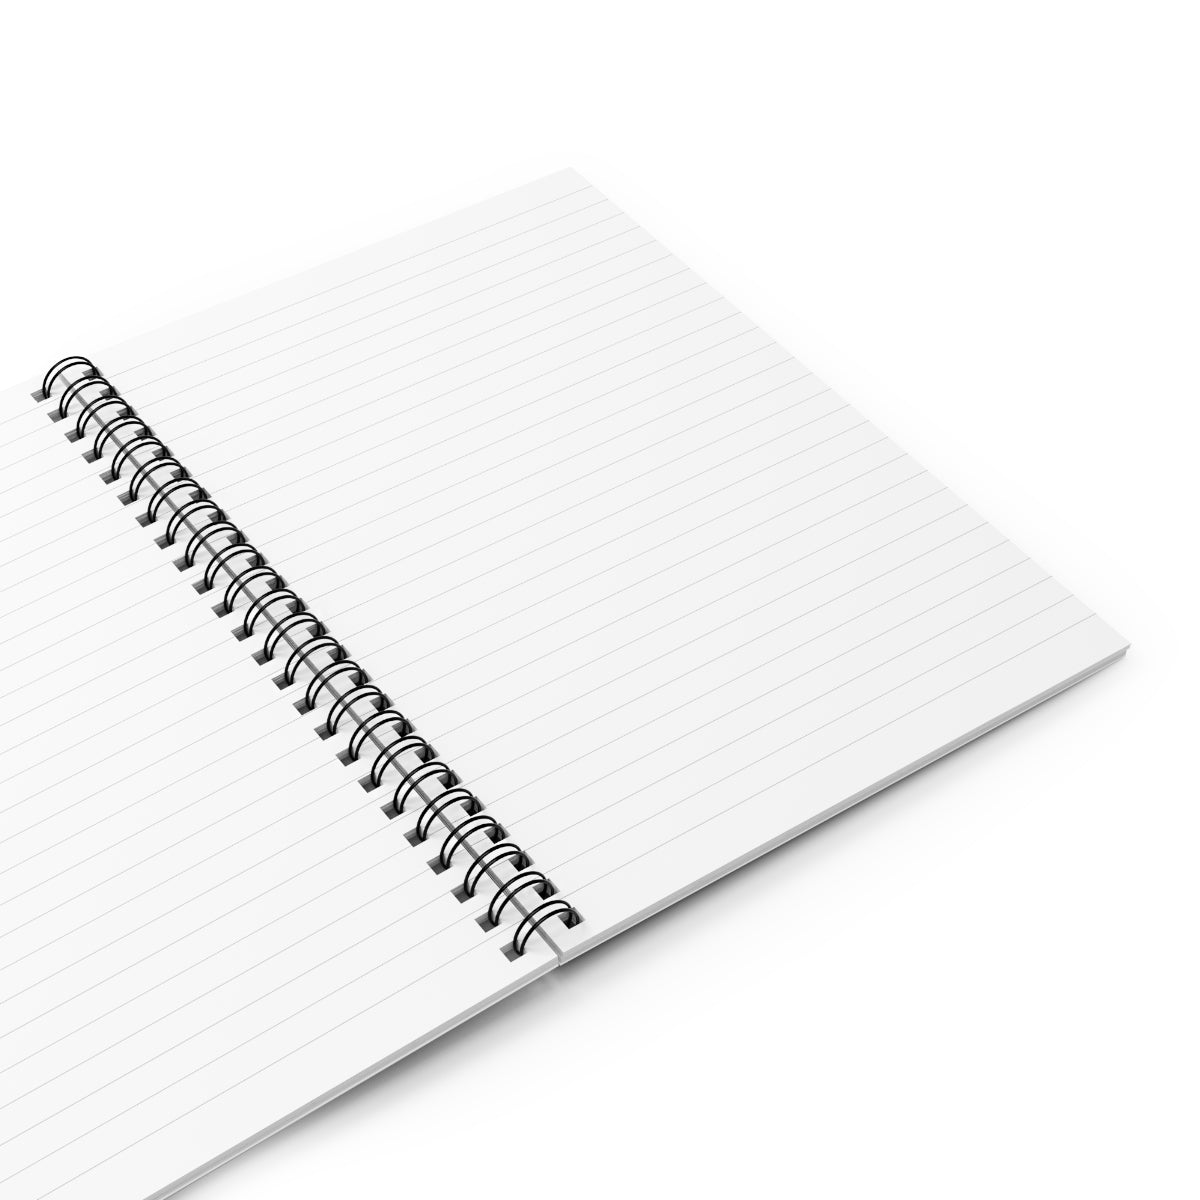 Man Na - Spiral Notebook - Ruled Line